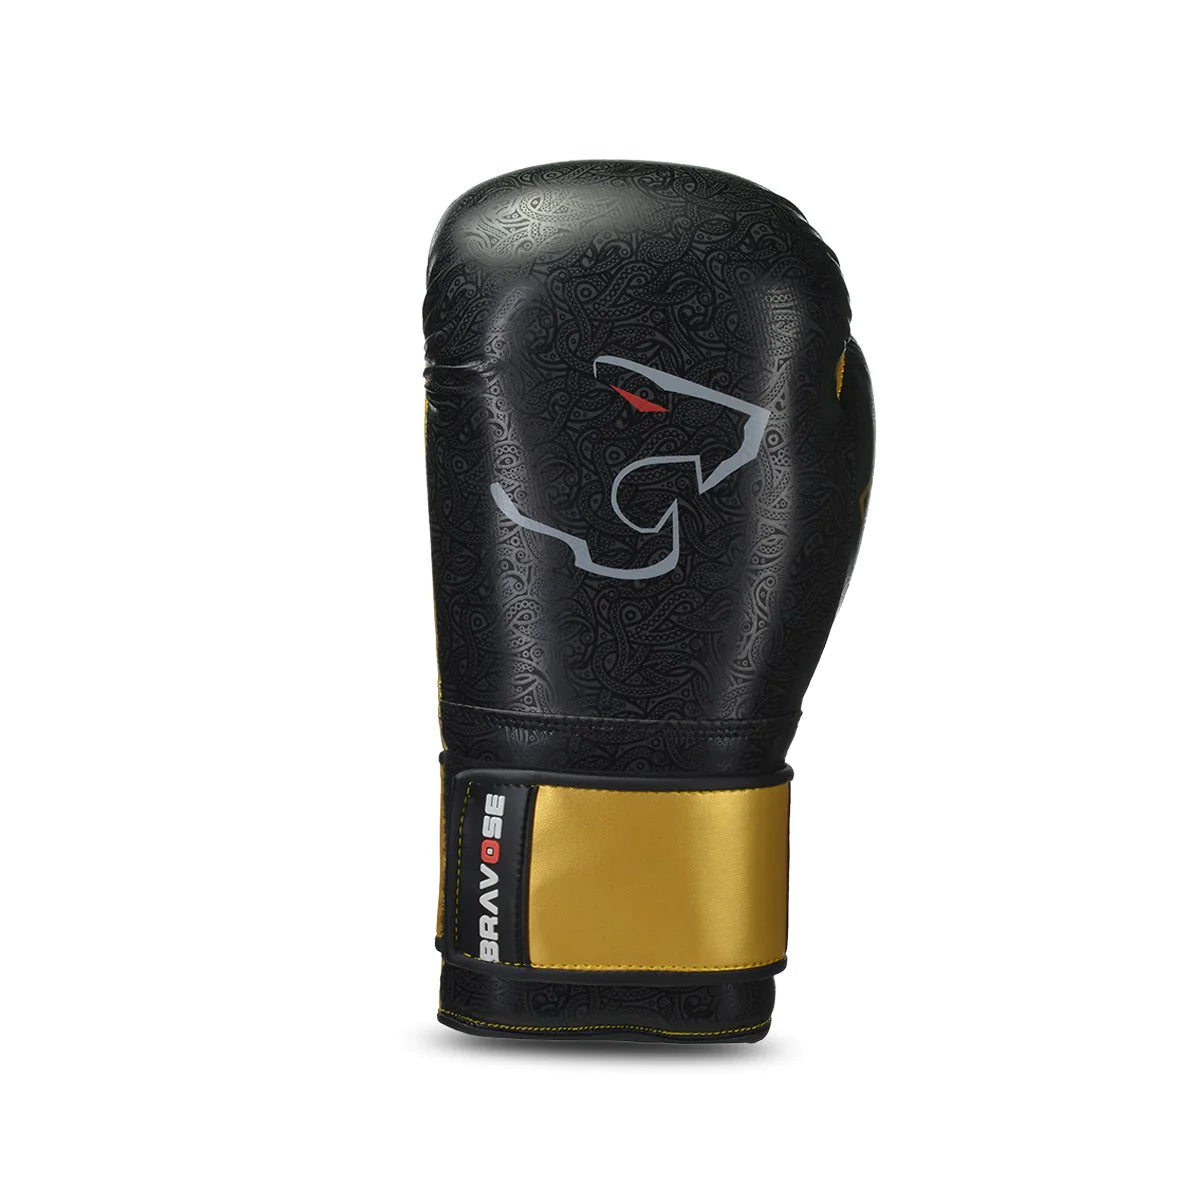 Bravose Nemesis Black & Gold Boxing Gloves